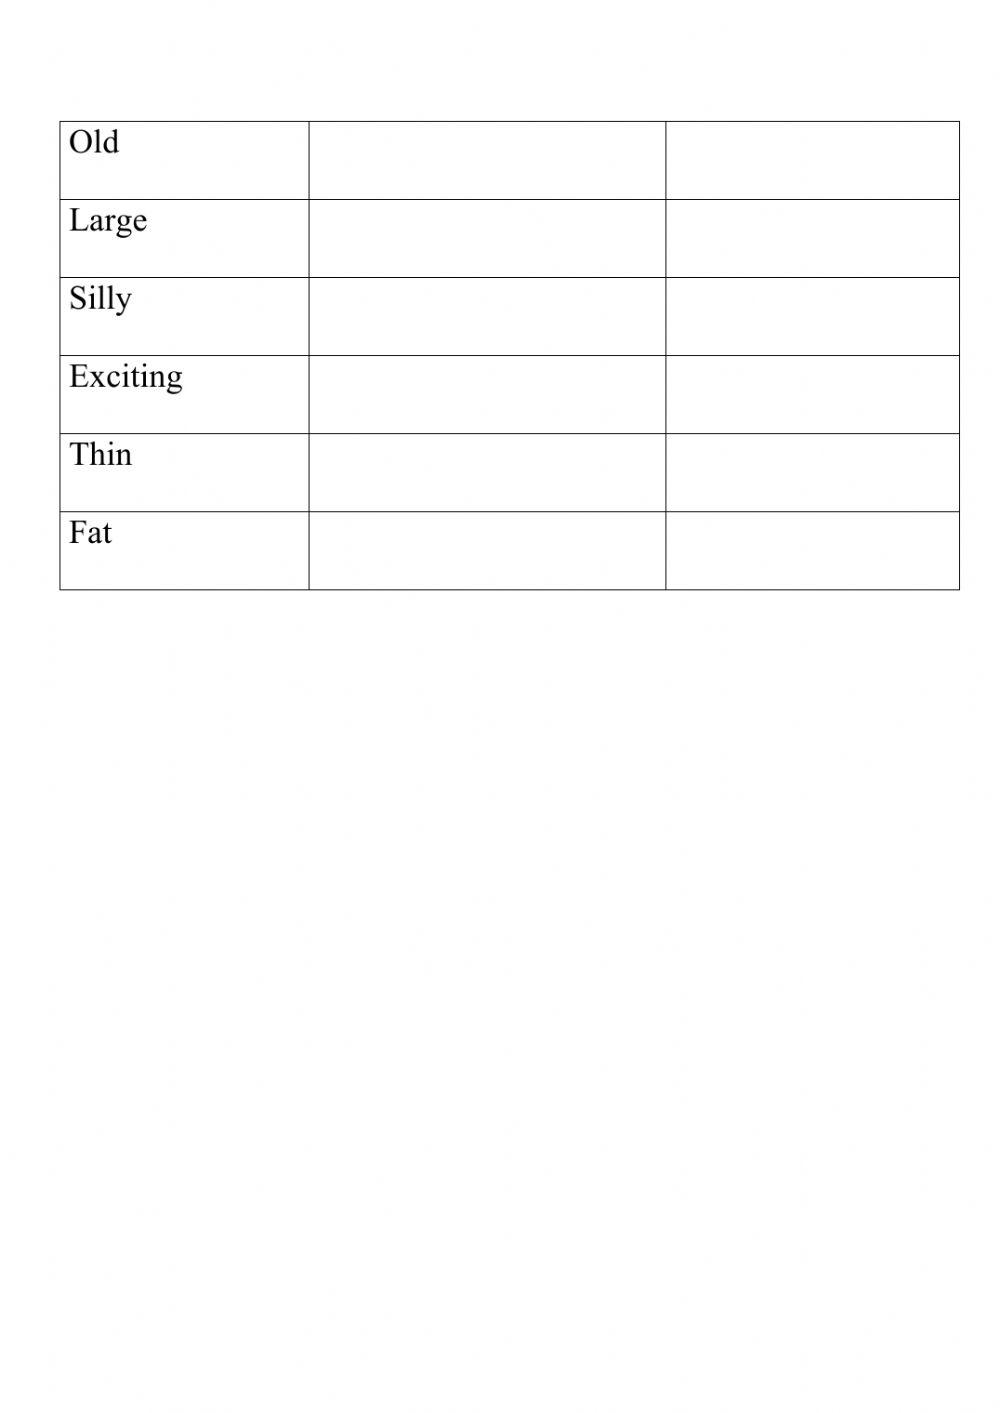 Grade 5 Adjectives (Comparative and Superlative)